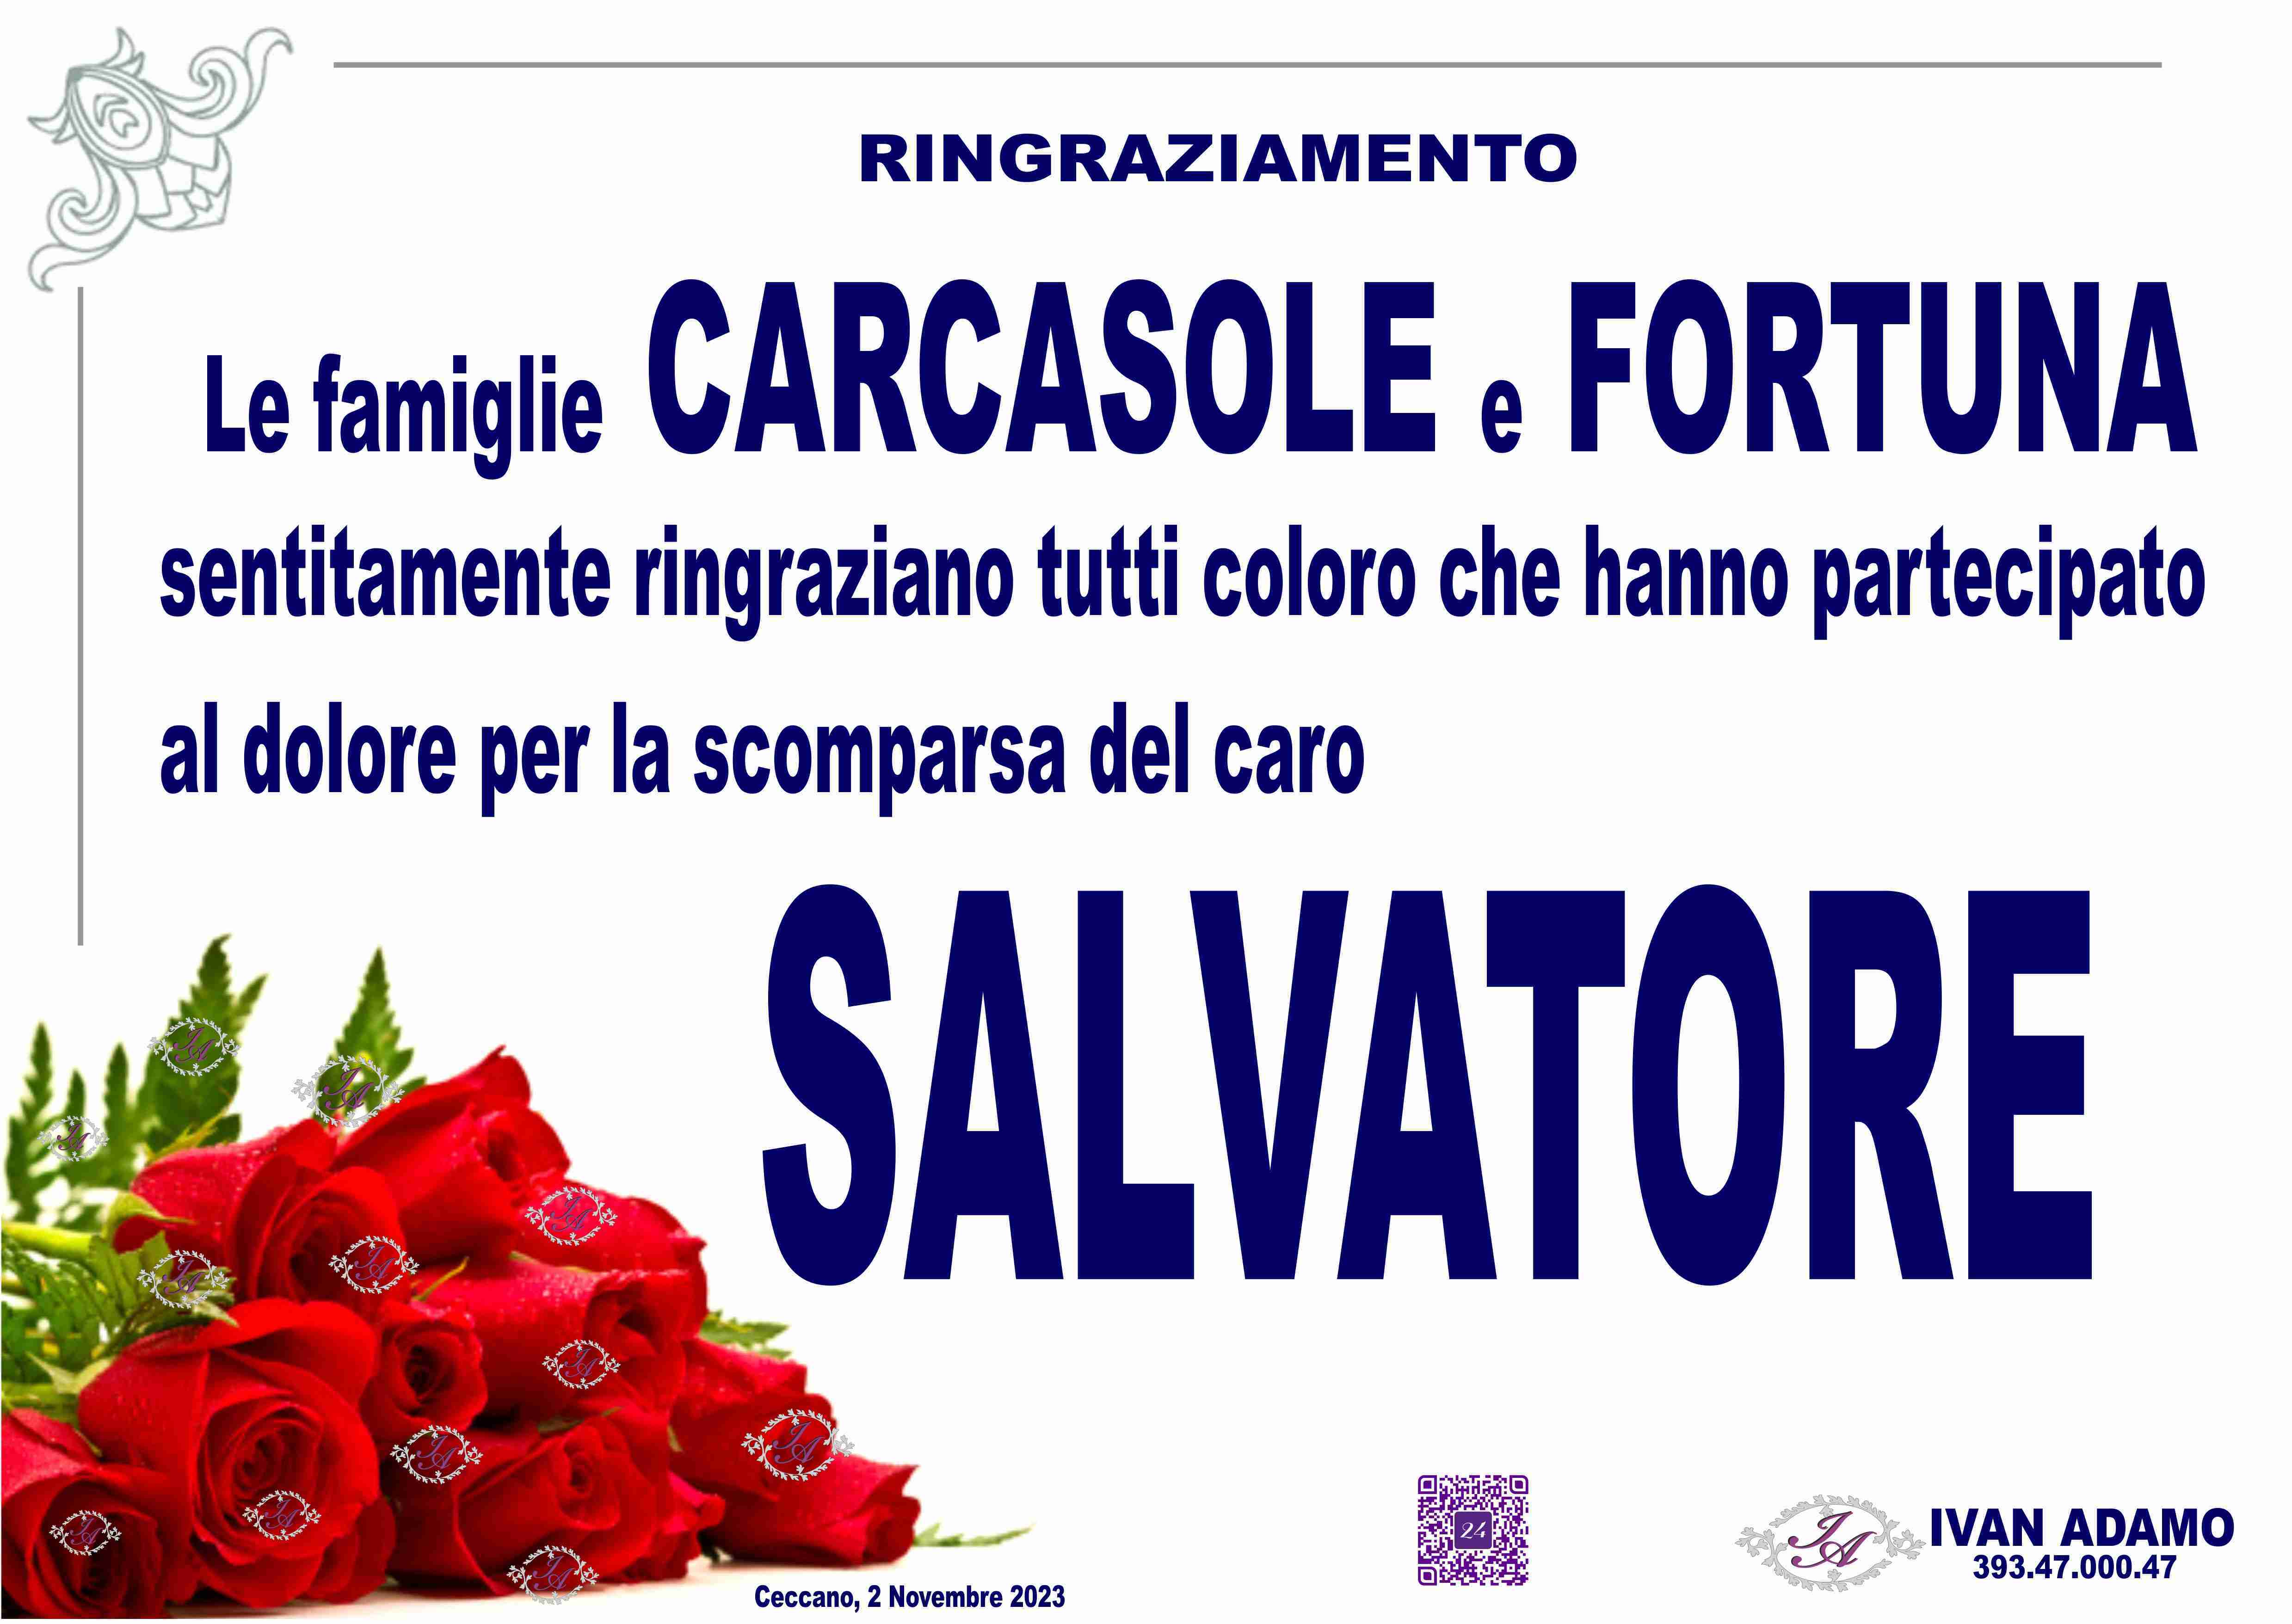 Salvatore Carcasole